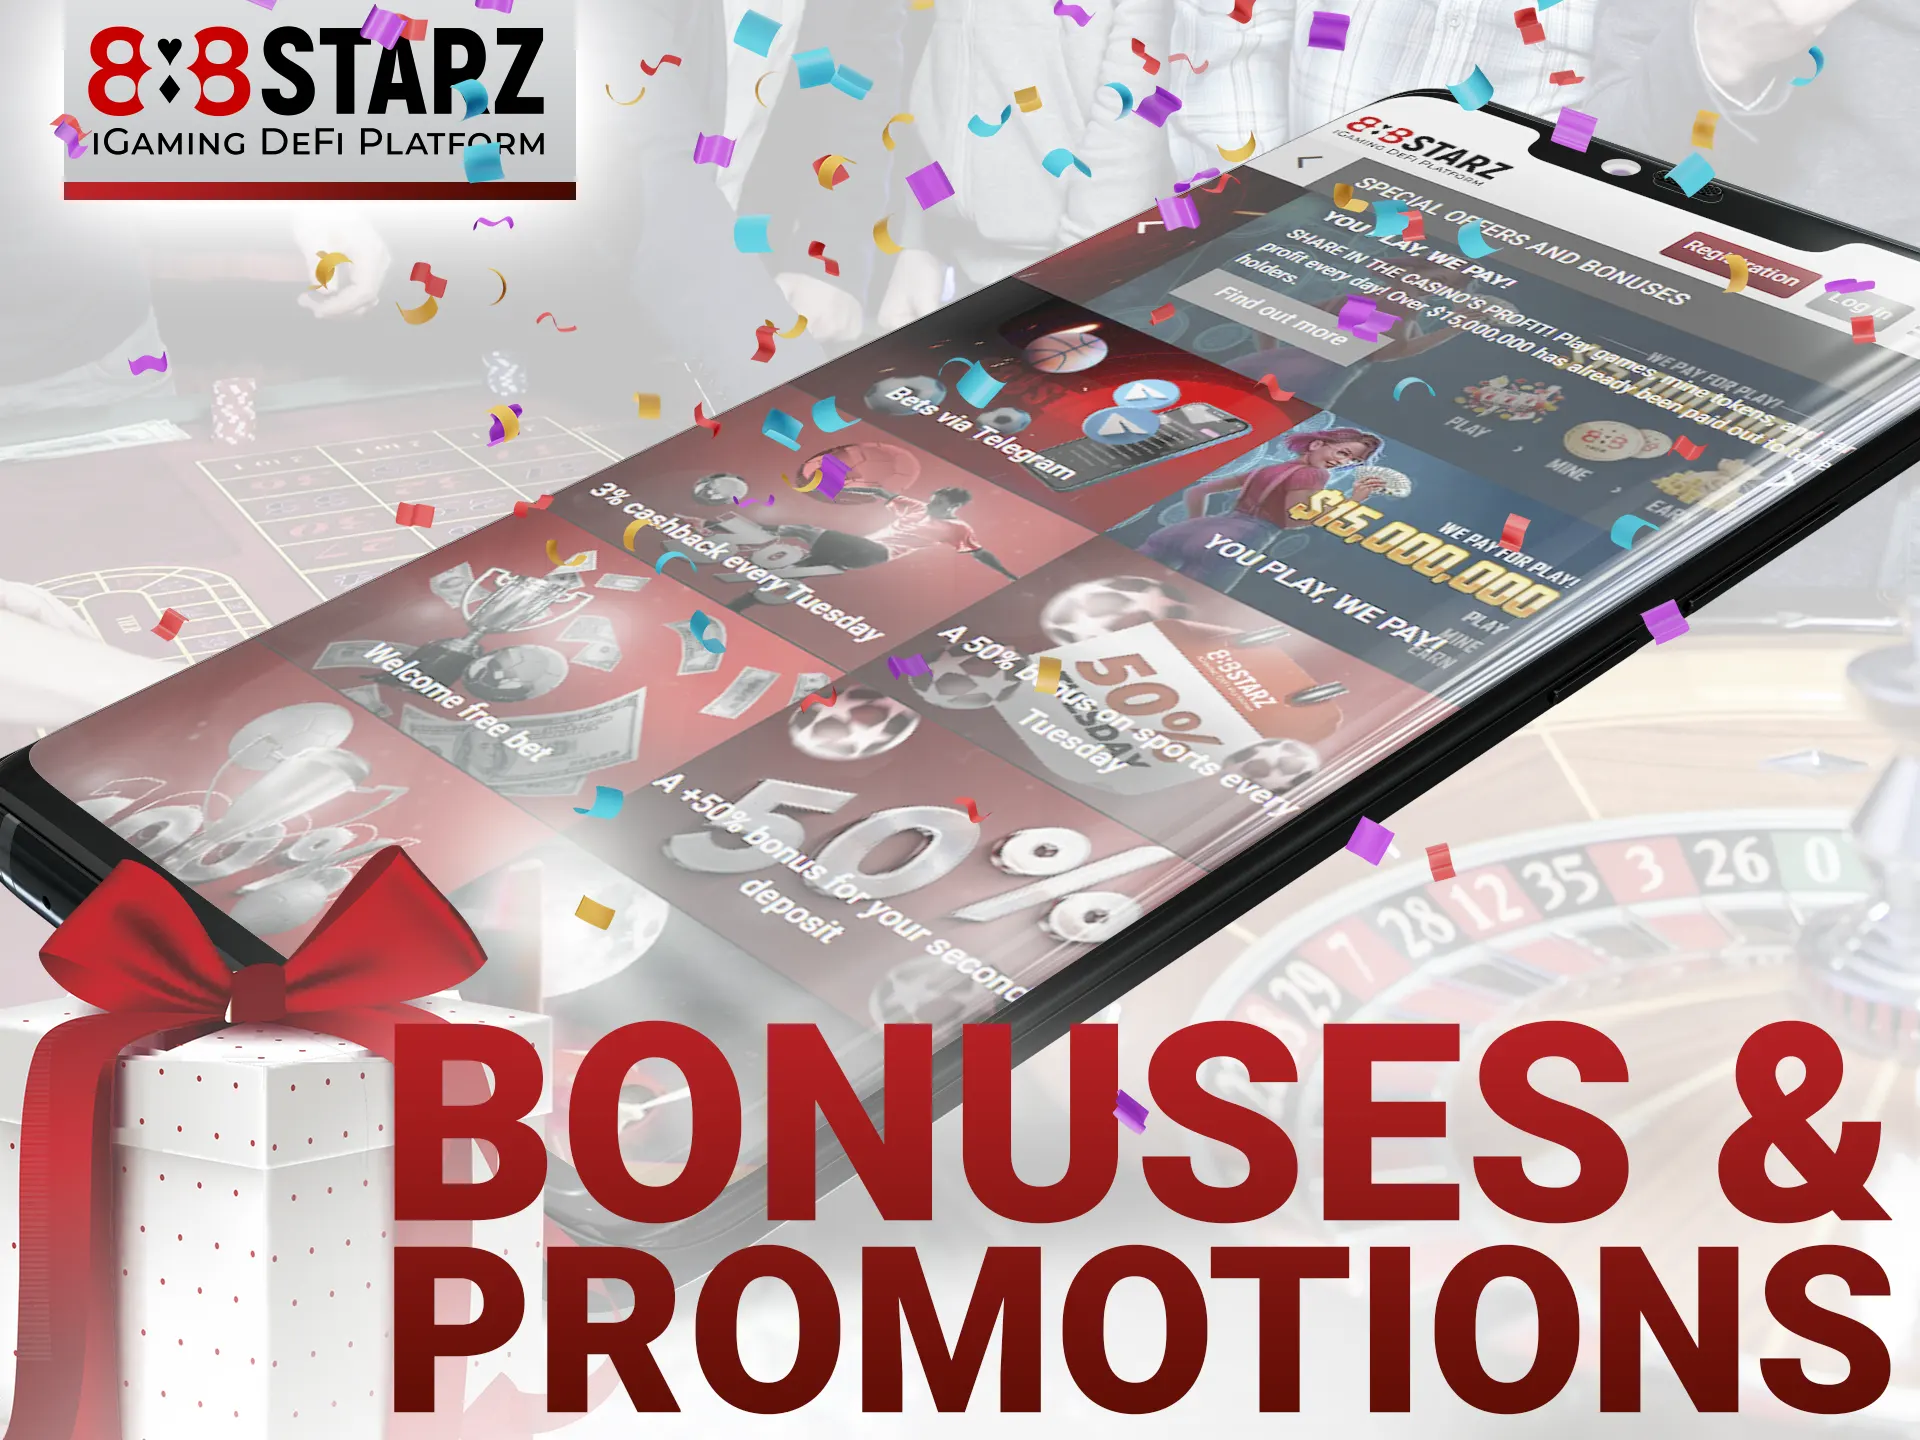 Get bonuses on the 888Starz app.